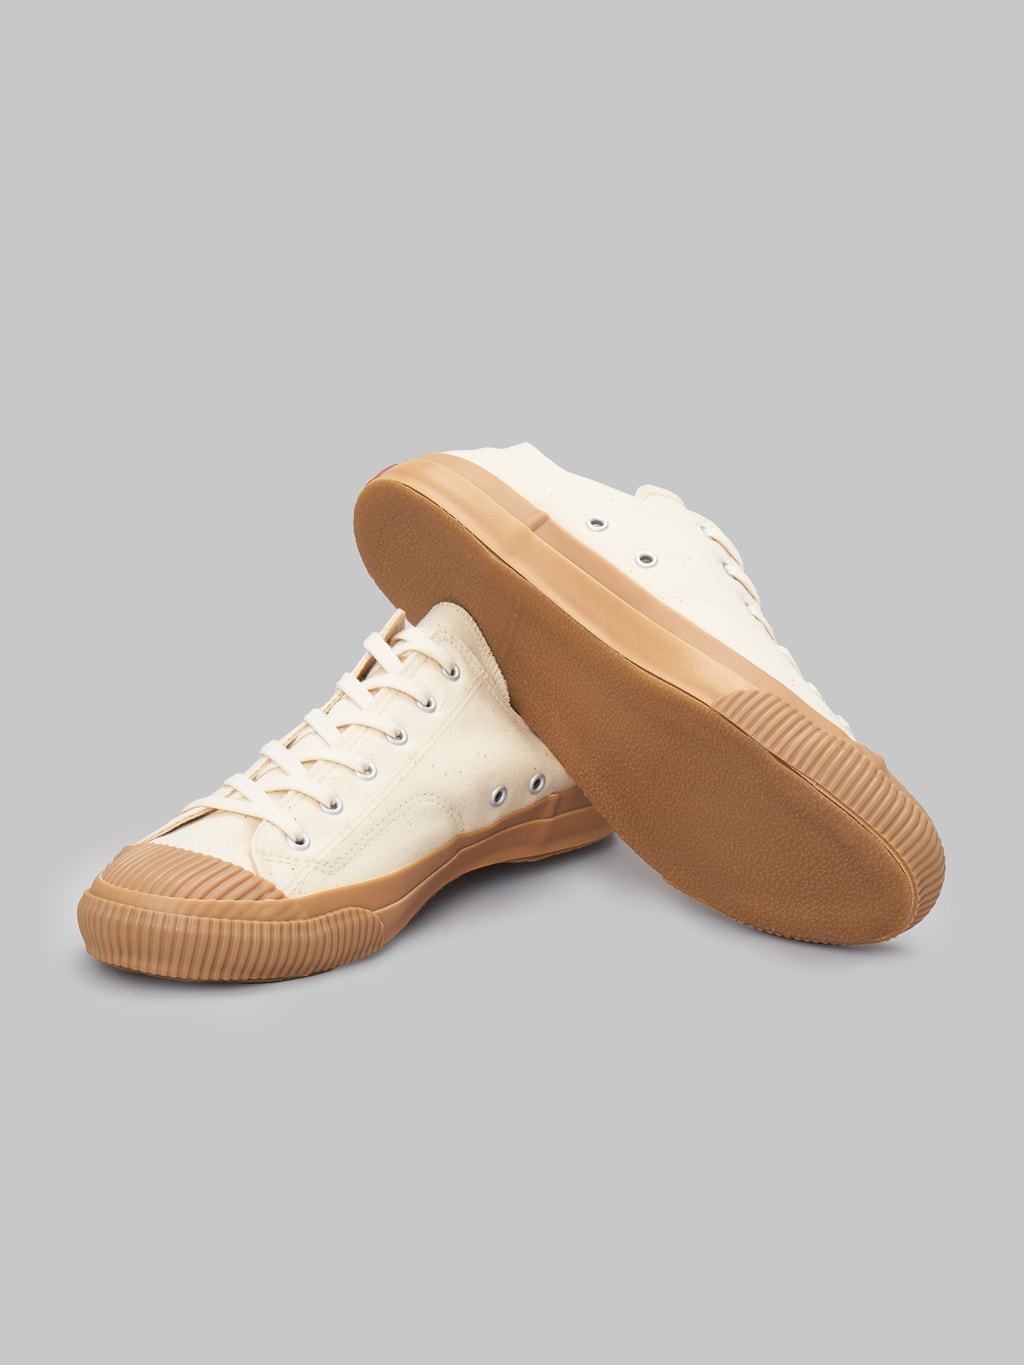 Pras shellcap low sneakers kinari gum rubber sole